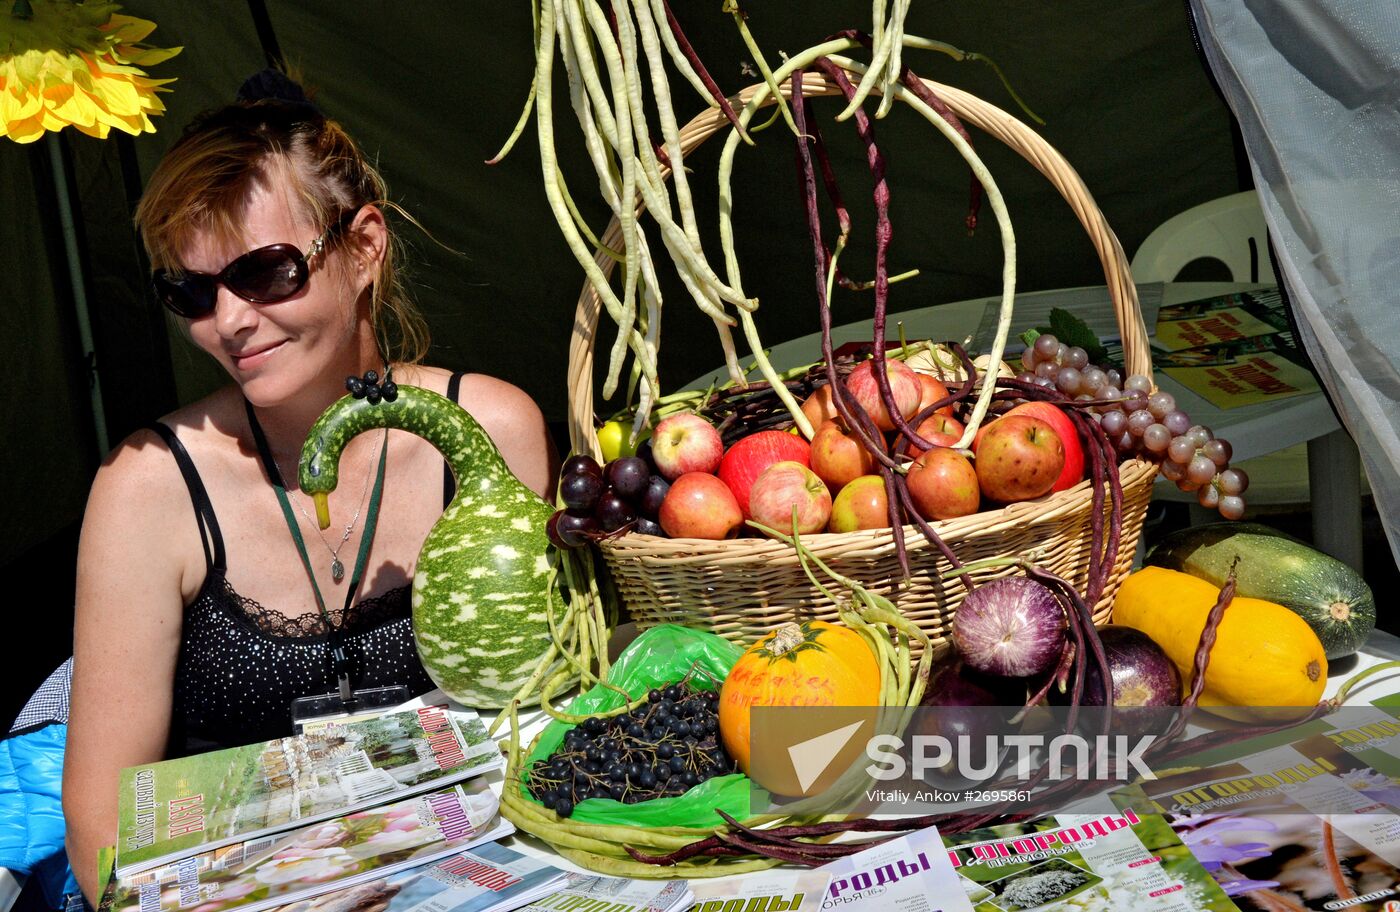 Vladivostok hosts 19th specialized Primorye Foods exhibition-fair